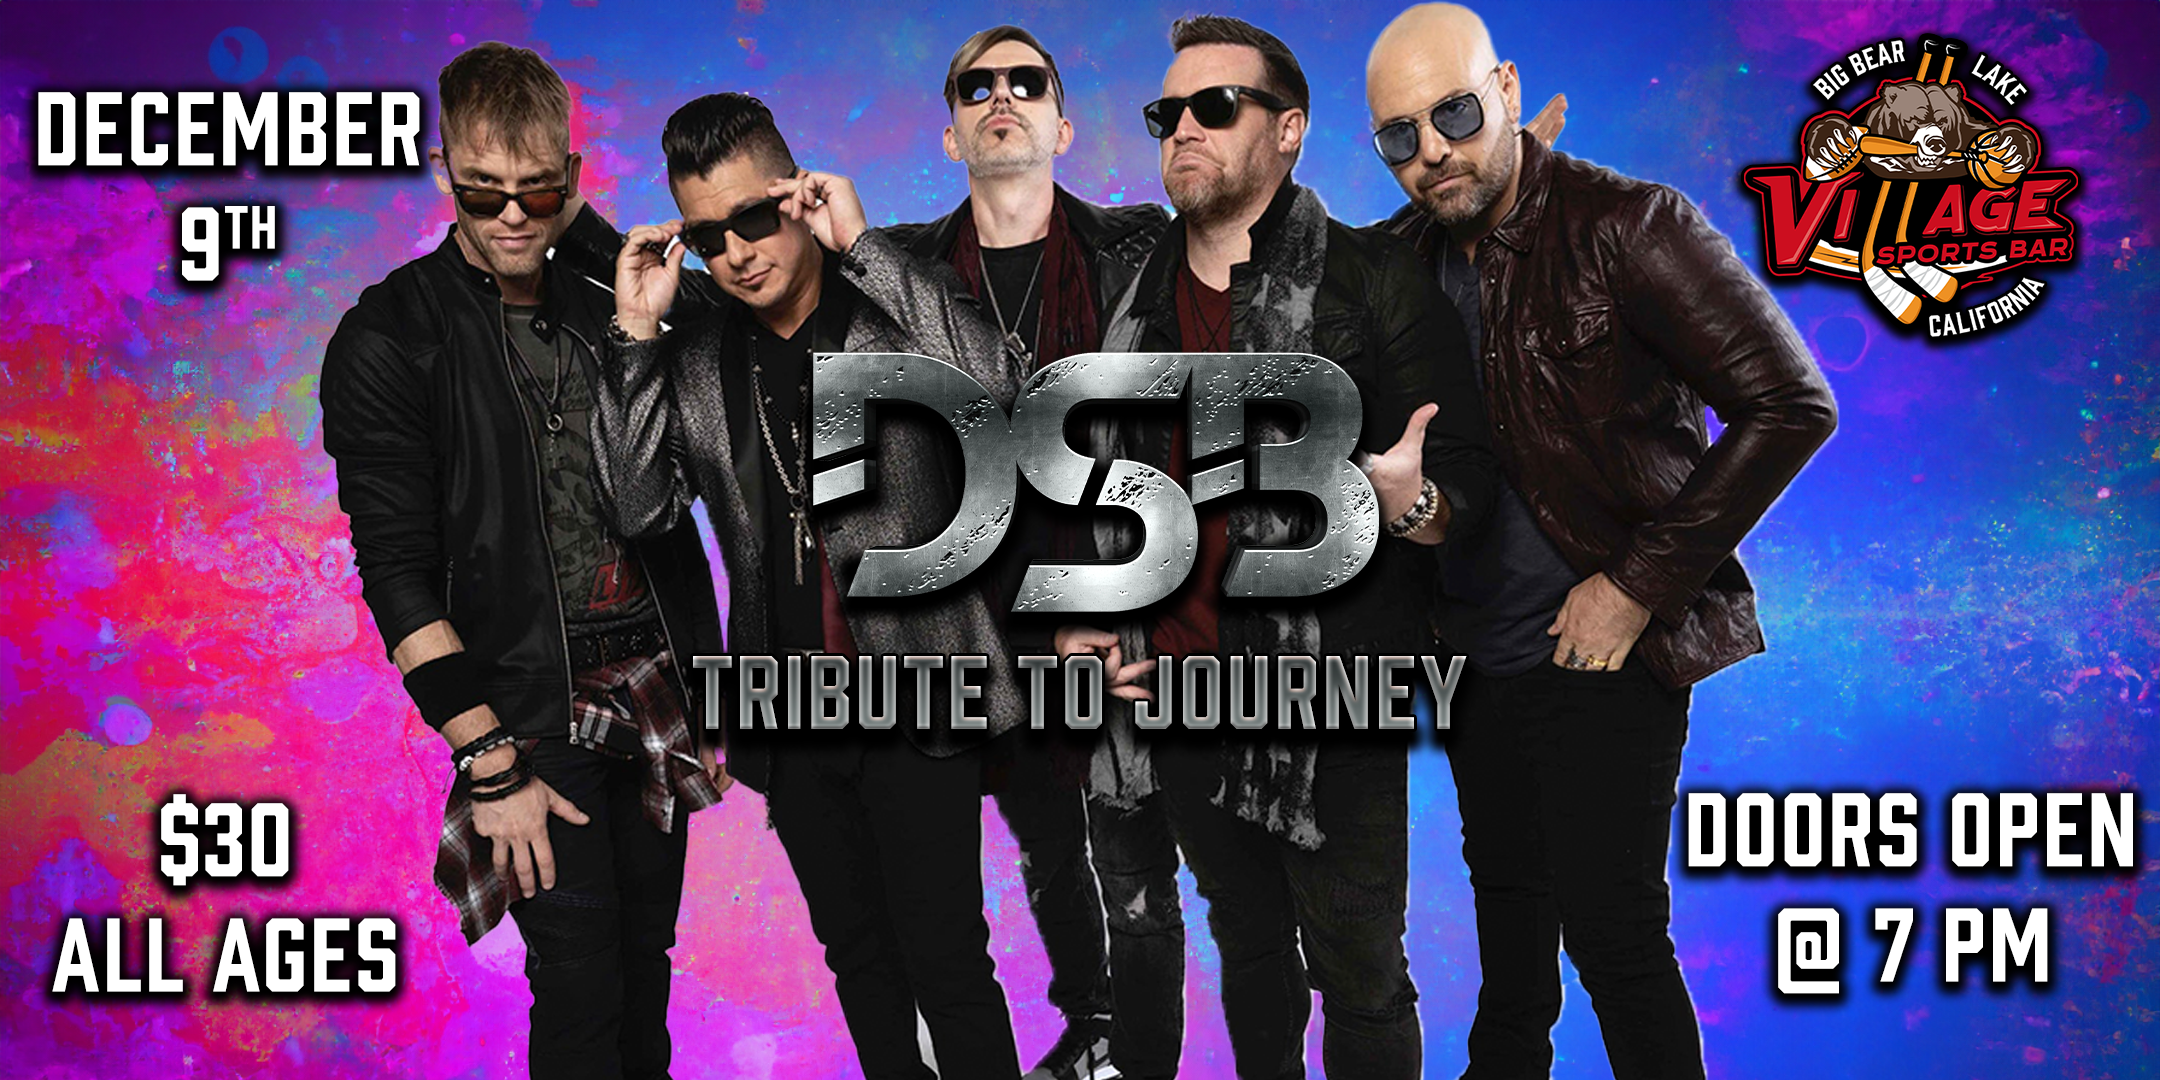 Village Sports Bar Presents: DSB - Tribute to Journey